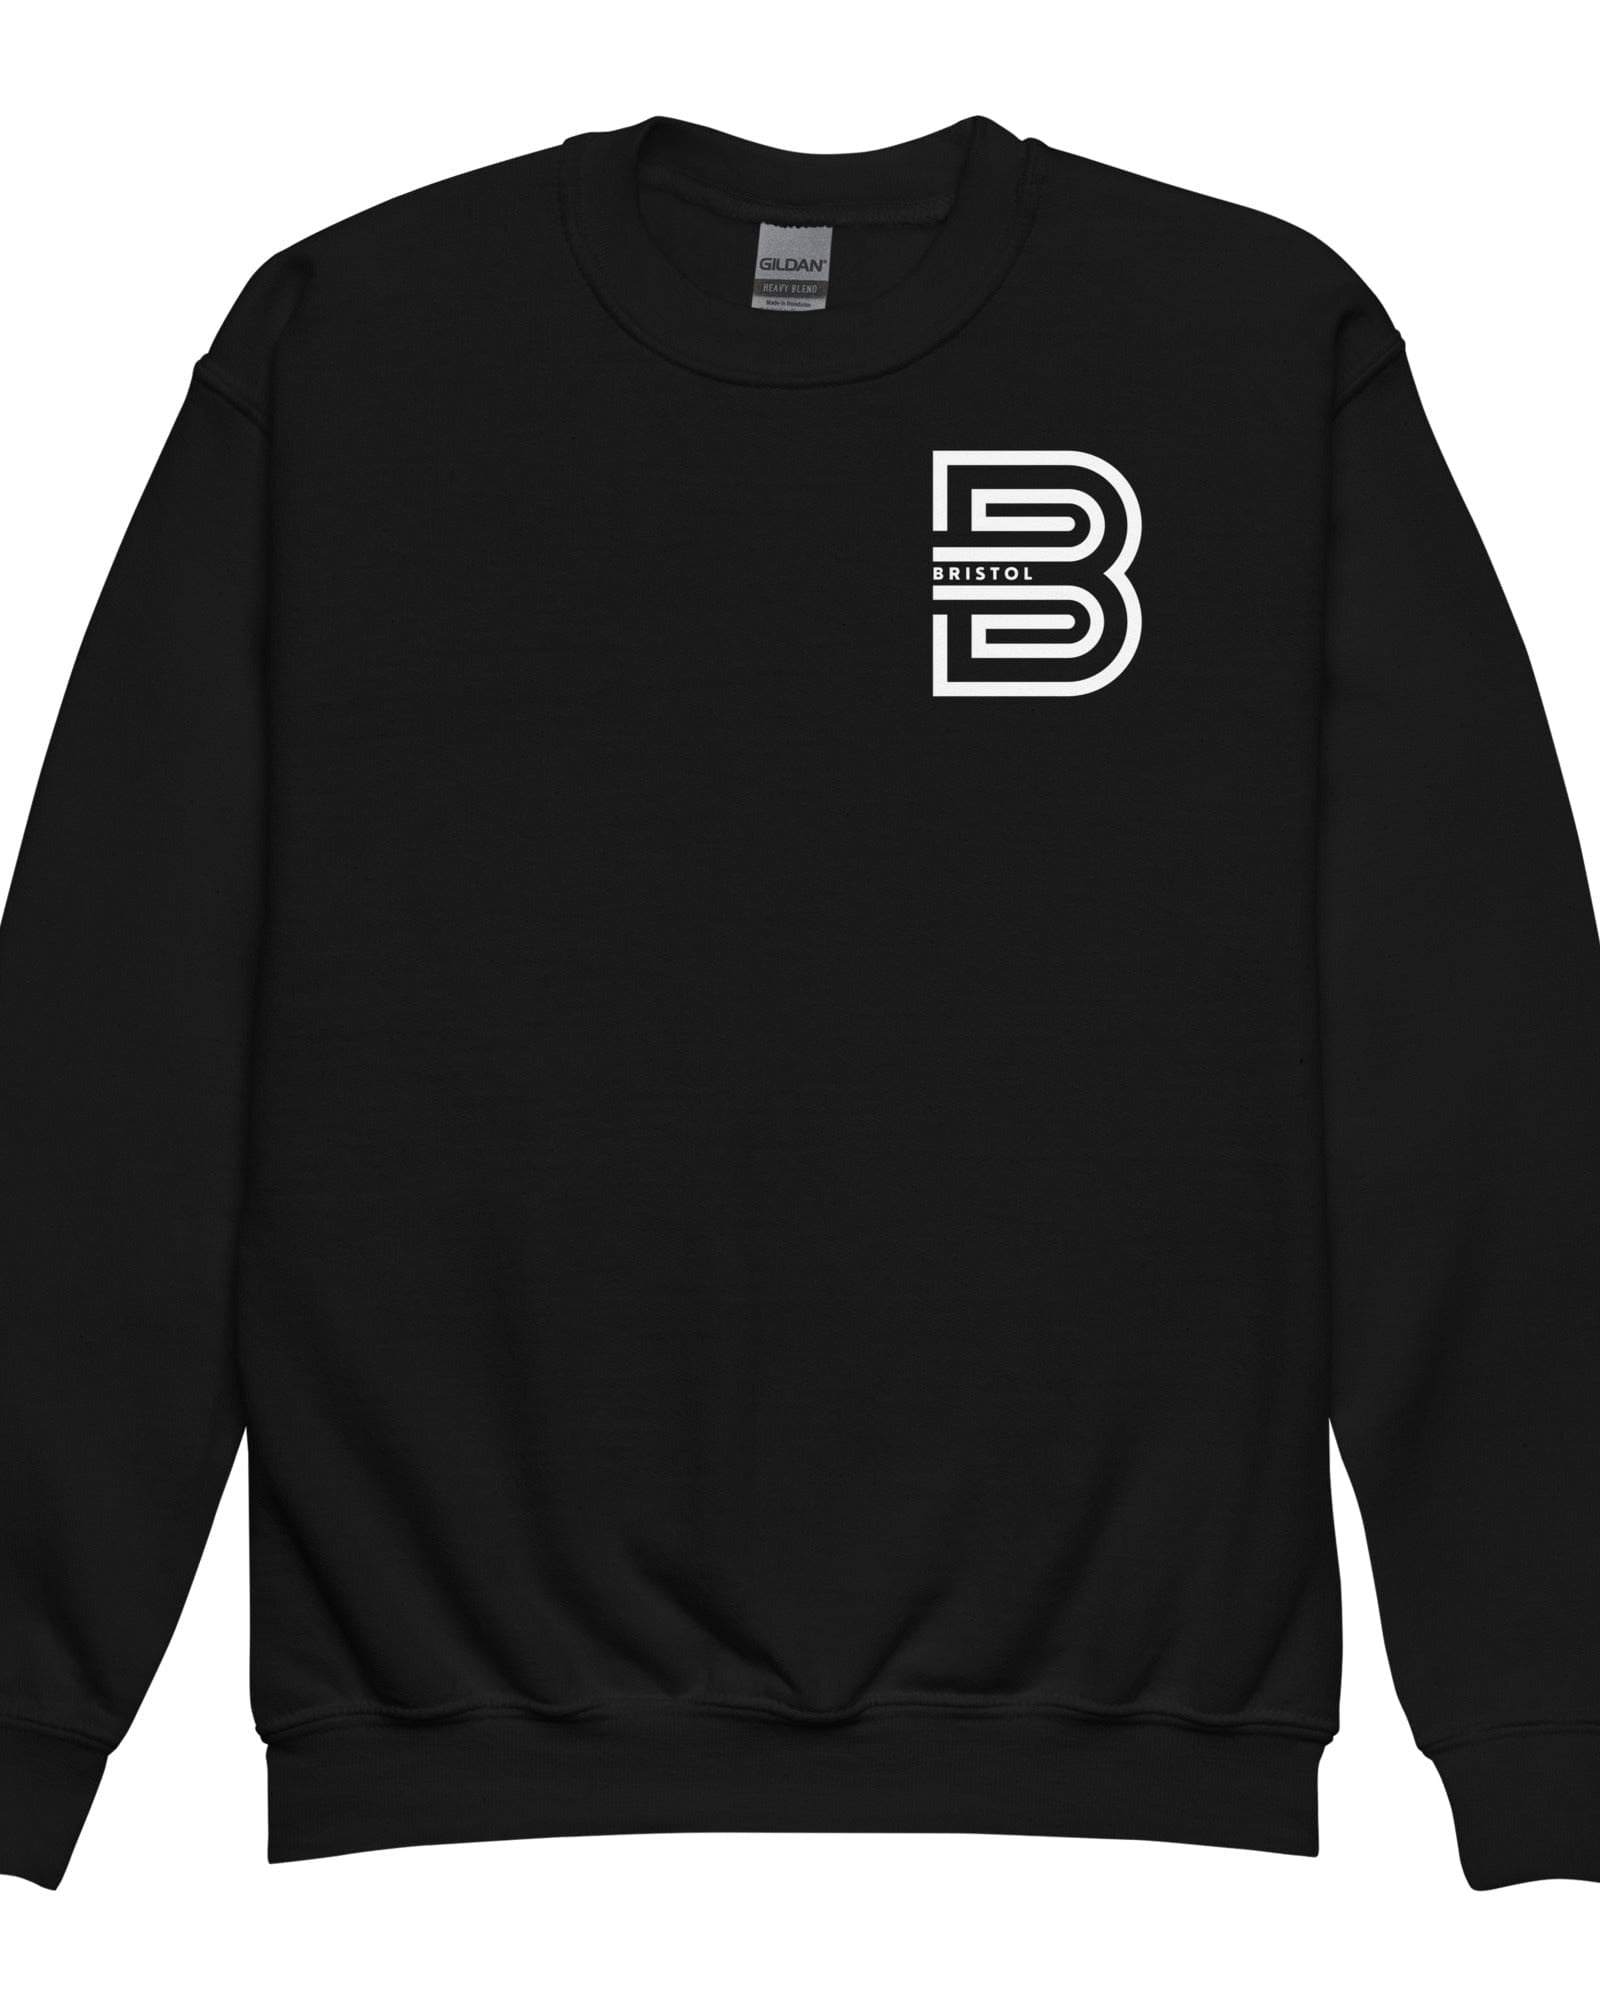 Bristol B Youth Crewneck Sweatshirt Black / XS youth sweatshirts Jolly & Goode